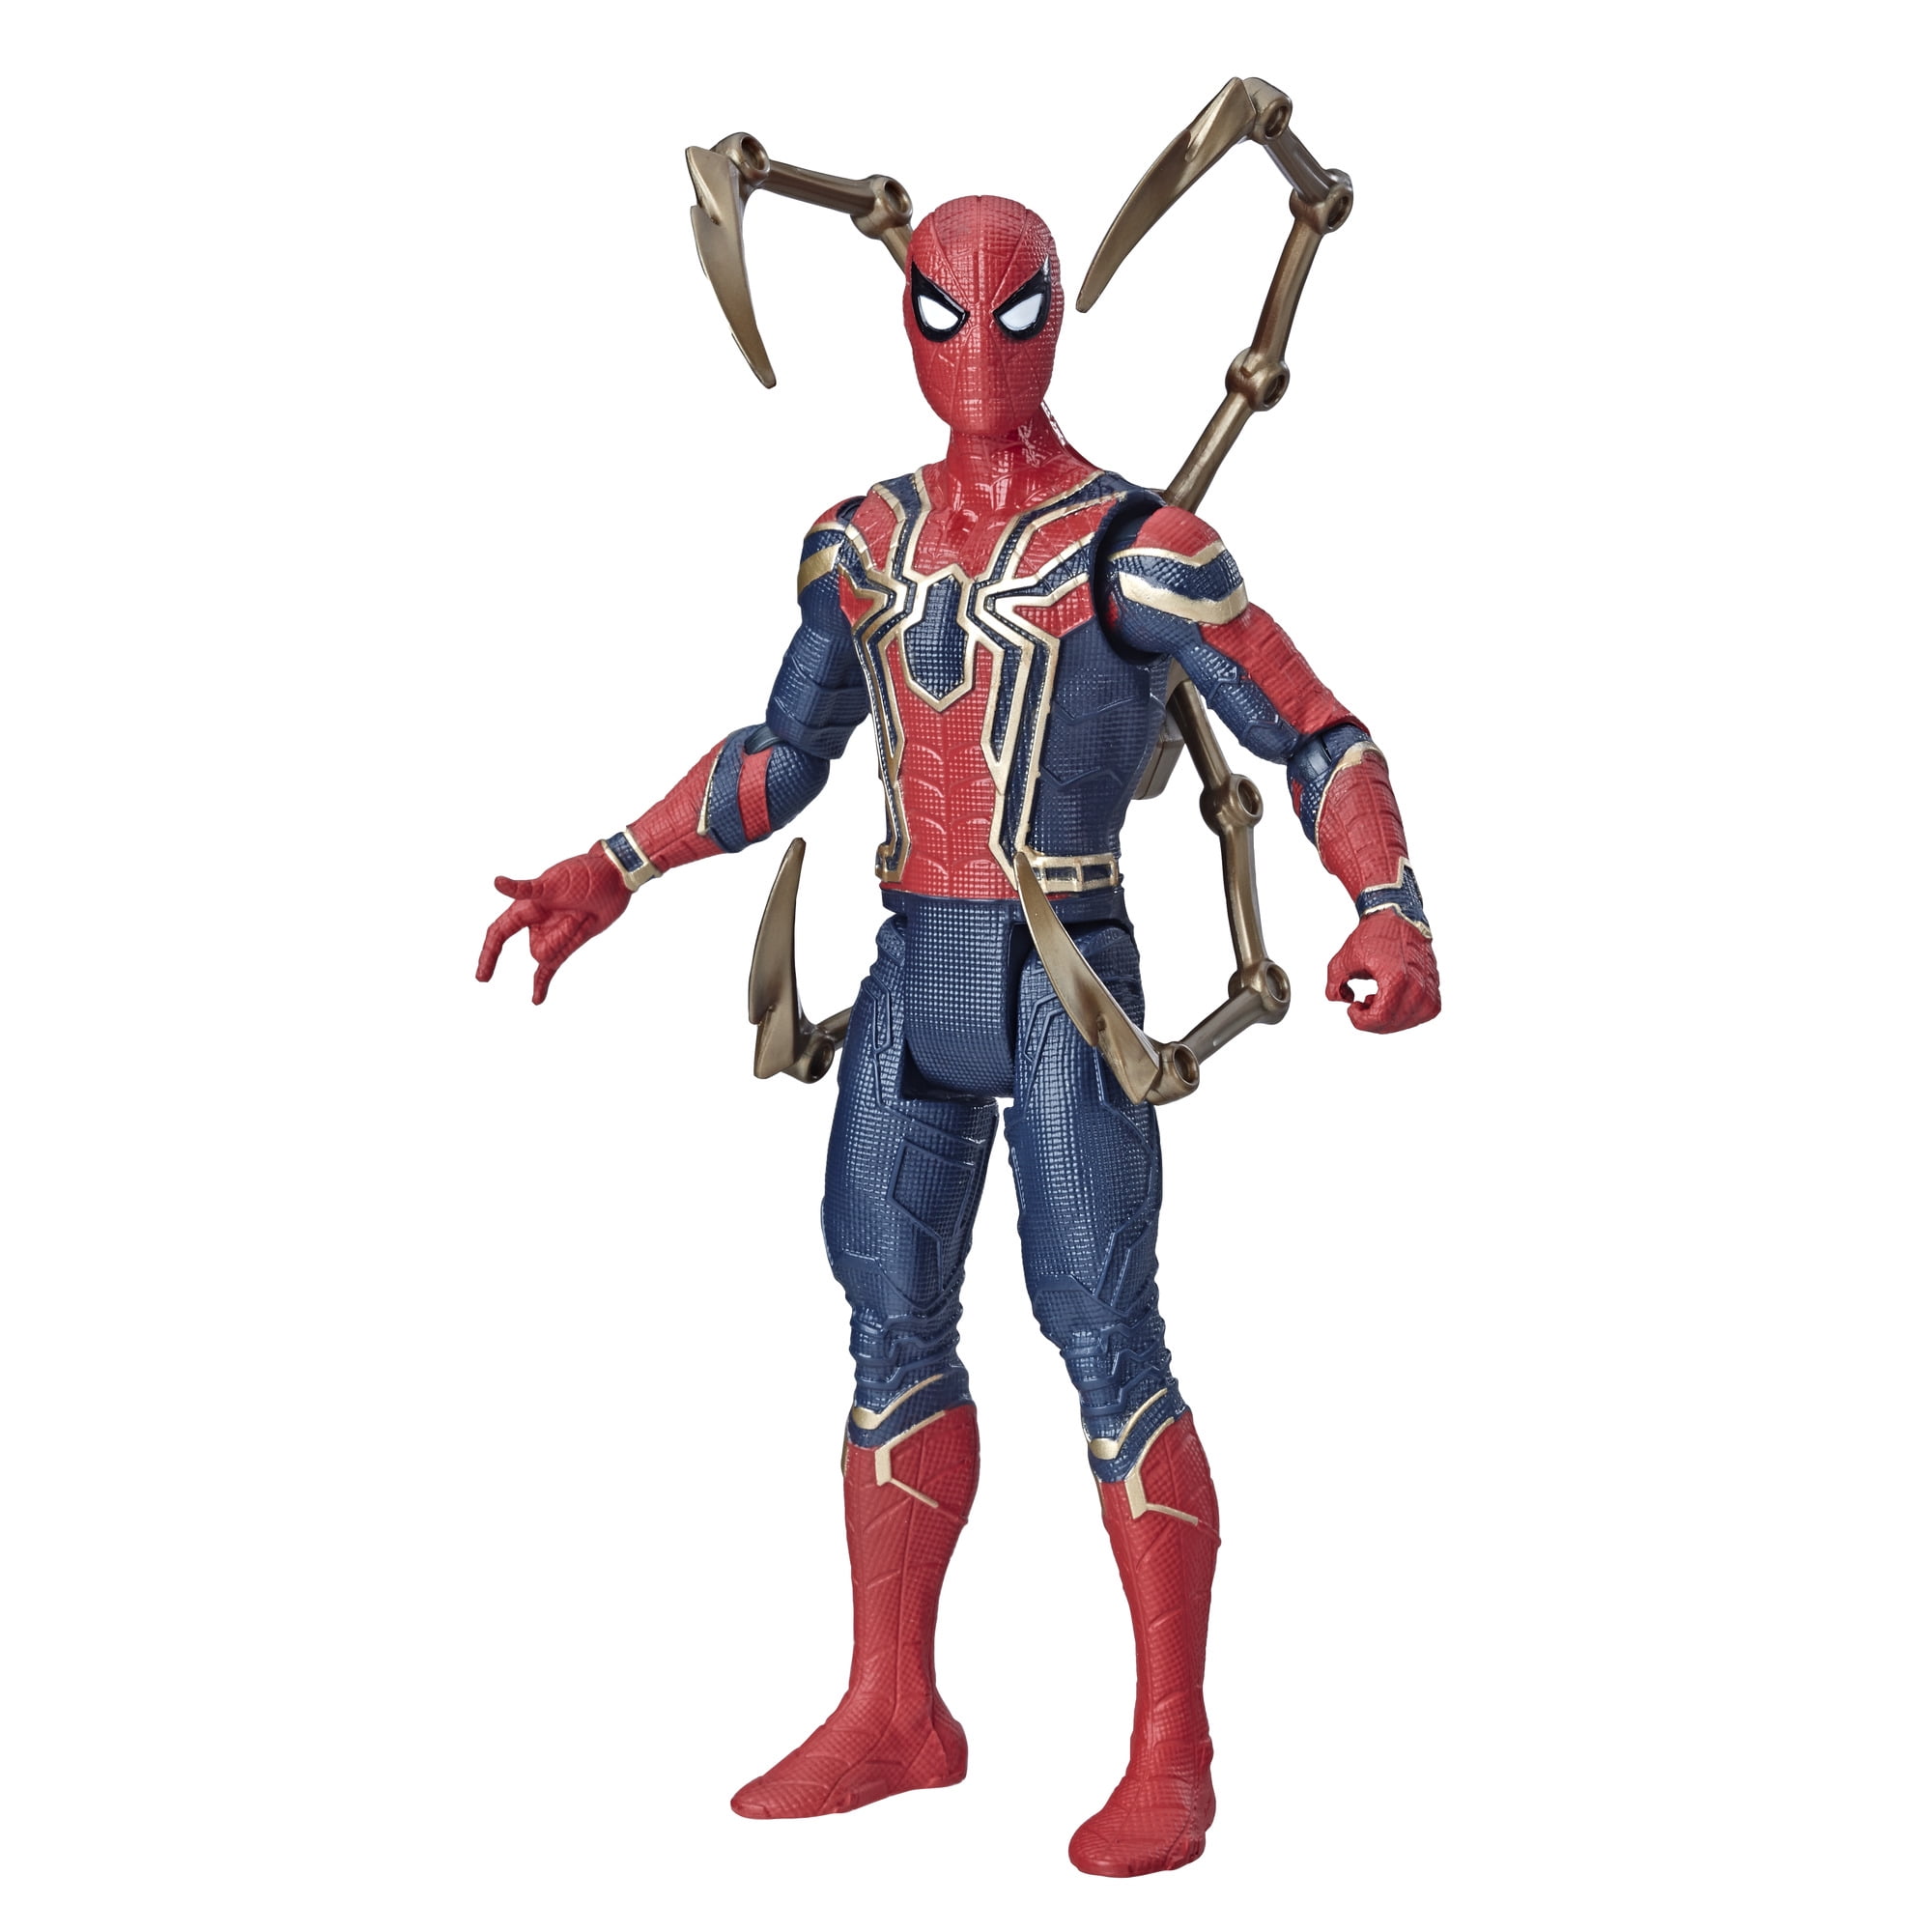 Marvel Spiderman Avengers Infinity War Iron  Spider-Man Action Figure Toy Model 